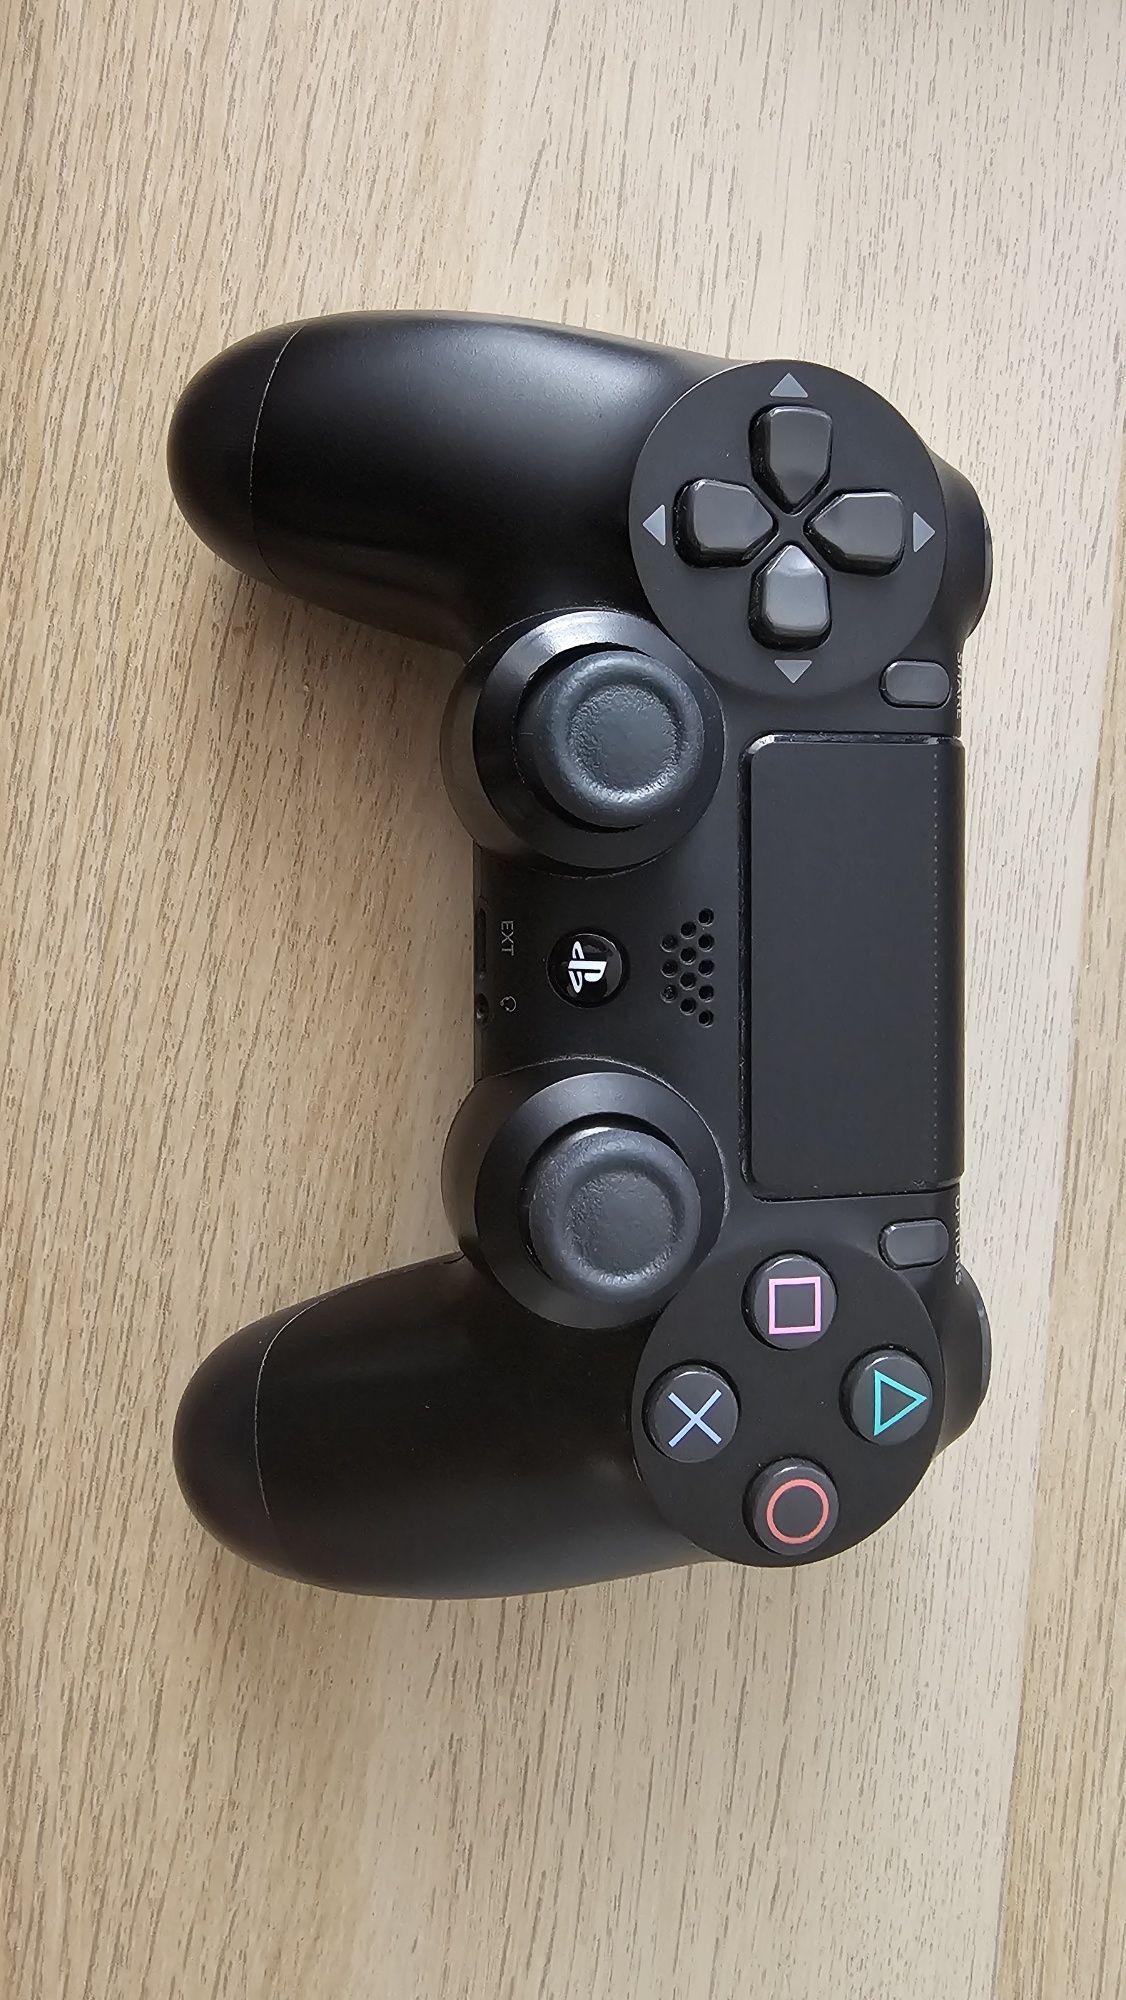 Dual shock PS4 controller